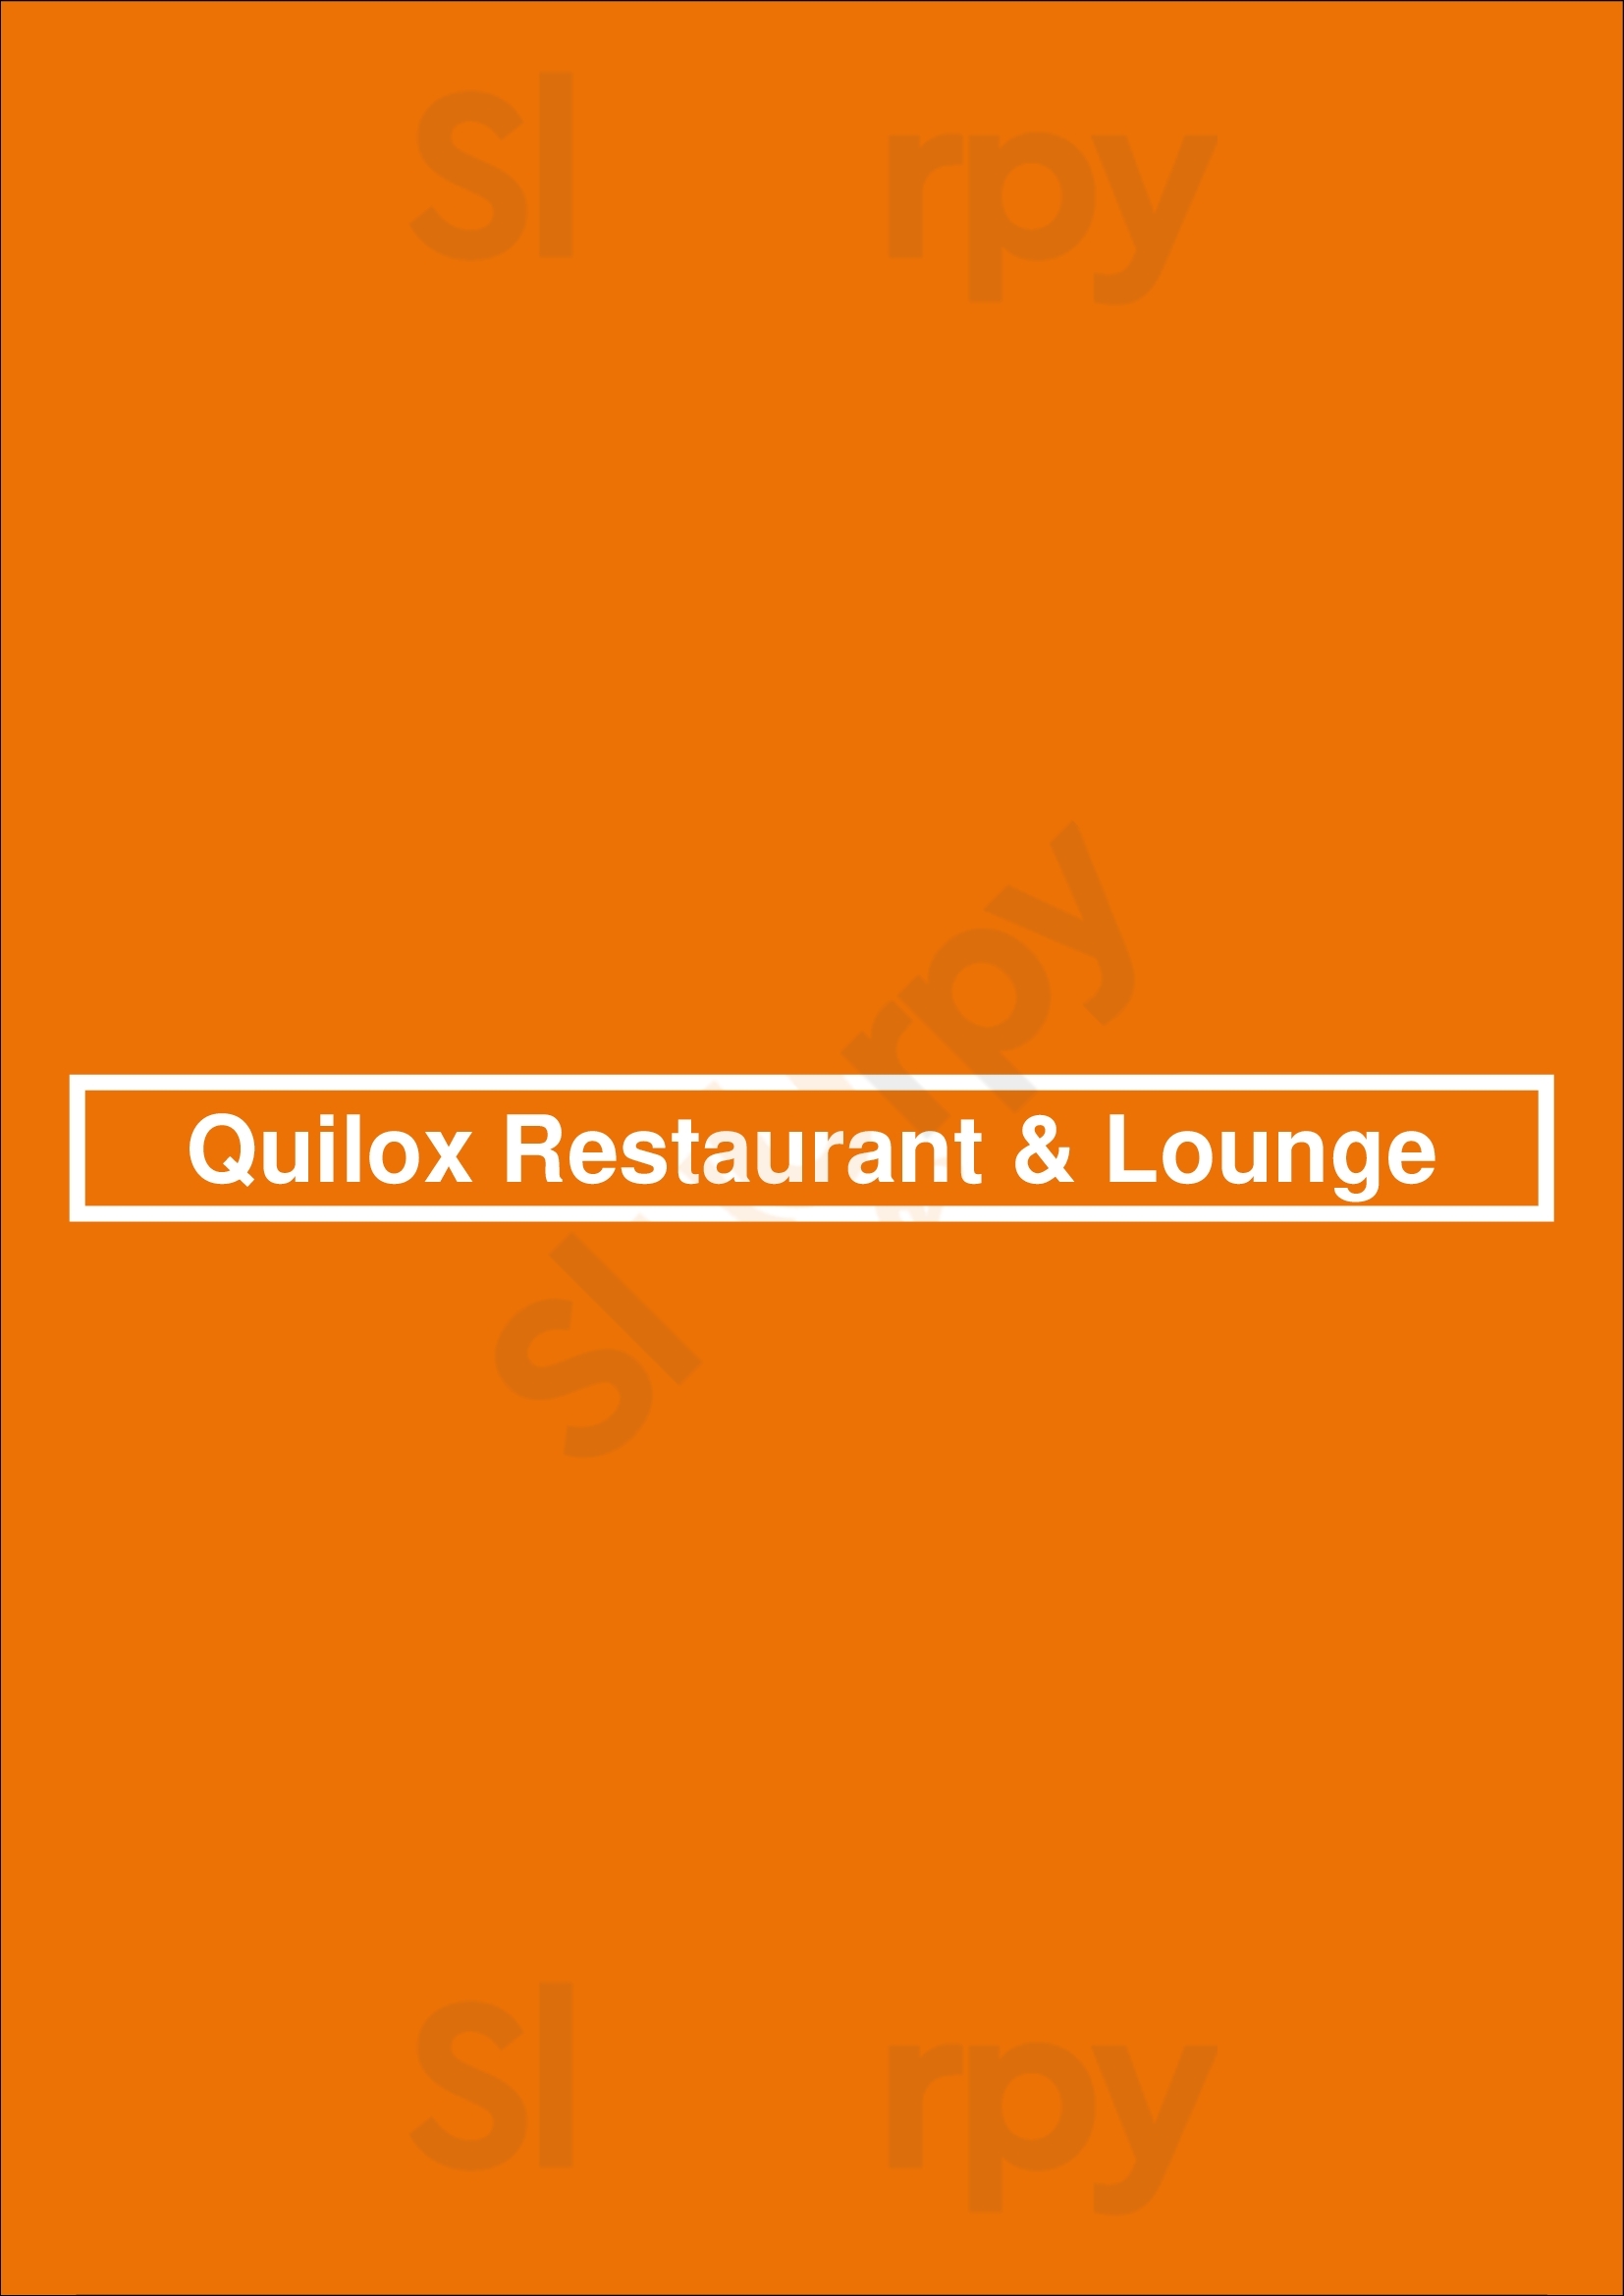 Quilox Restaurant & Lounge Washington DC Menu - 1